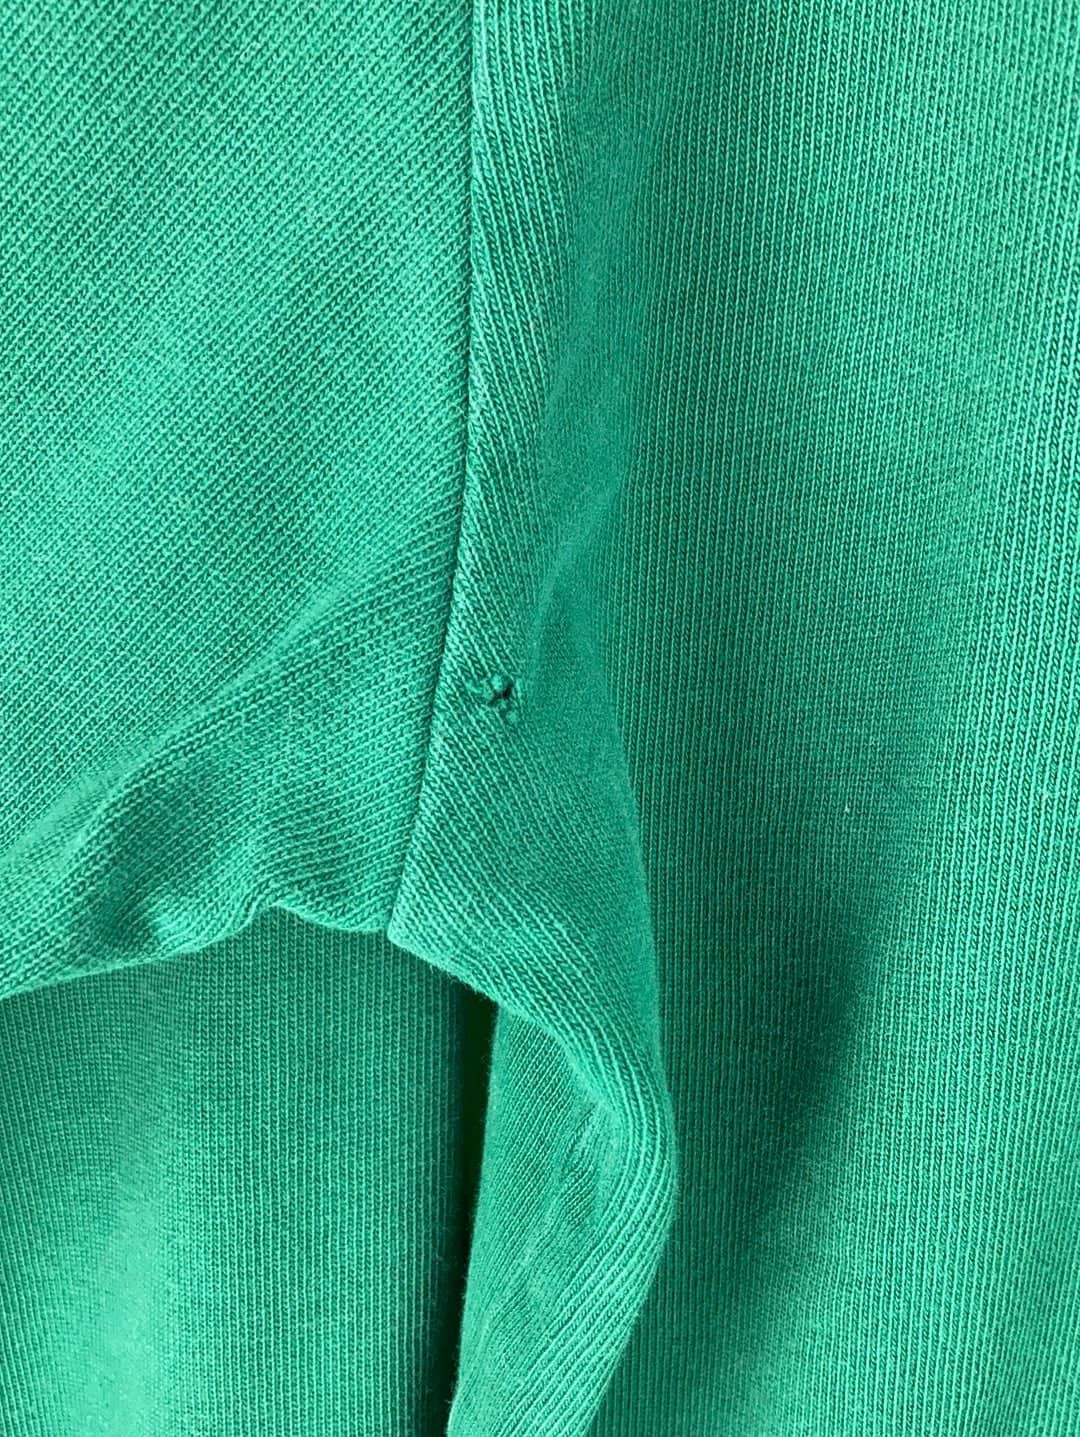 Gant Button Sweater (L)